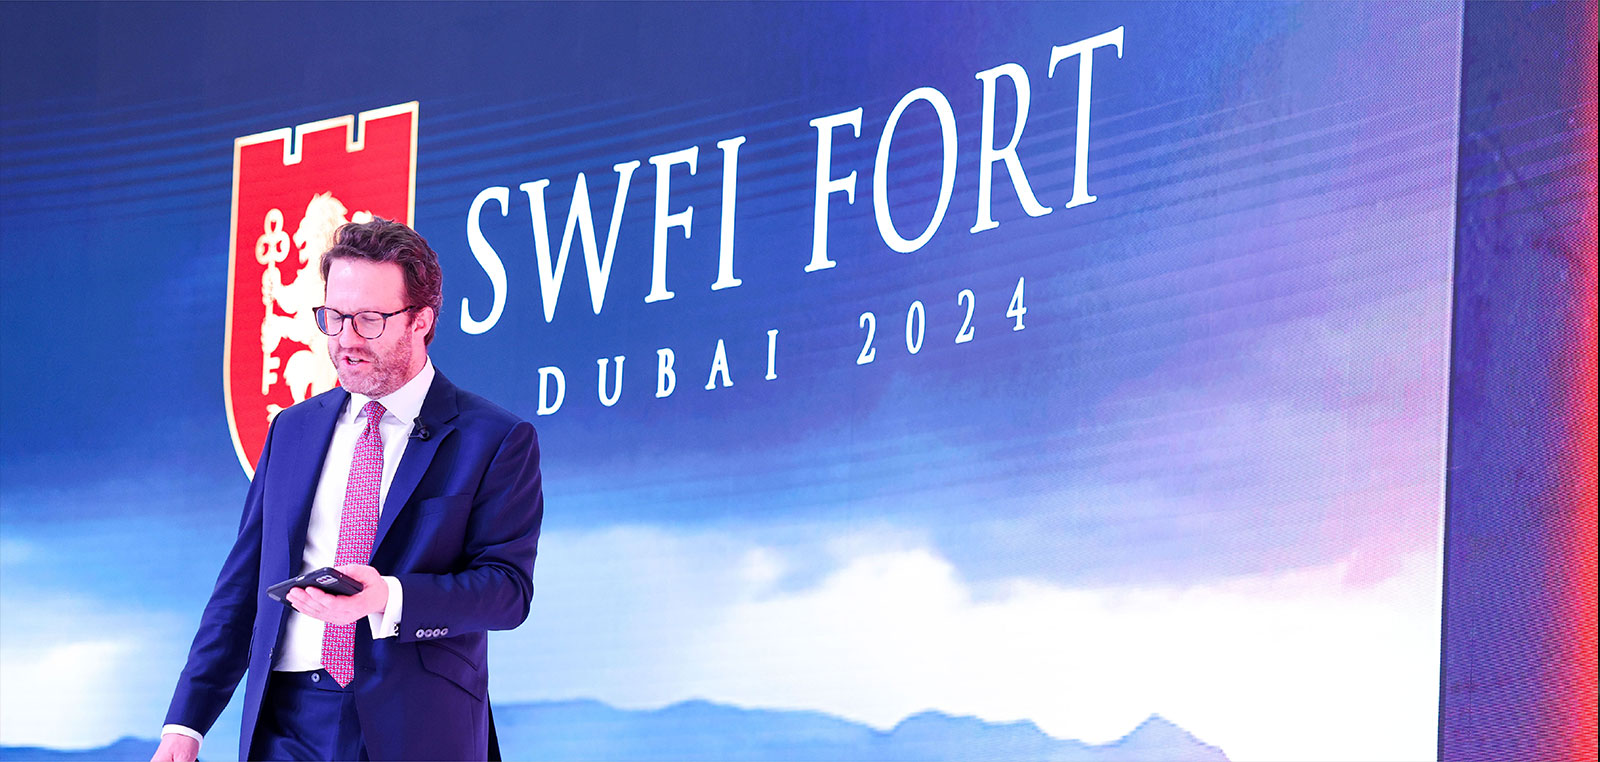 SWFI FORT DUBAI 2024